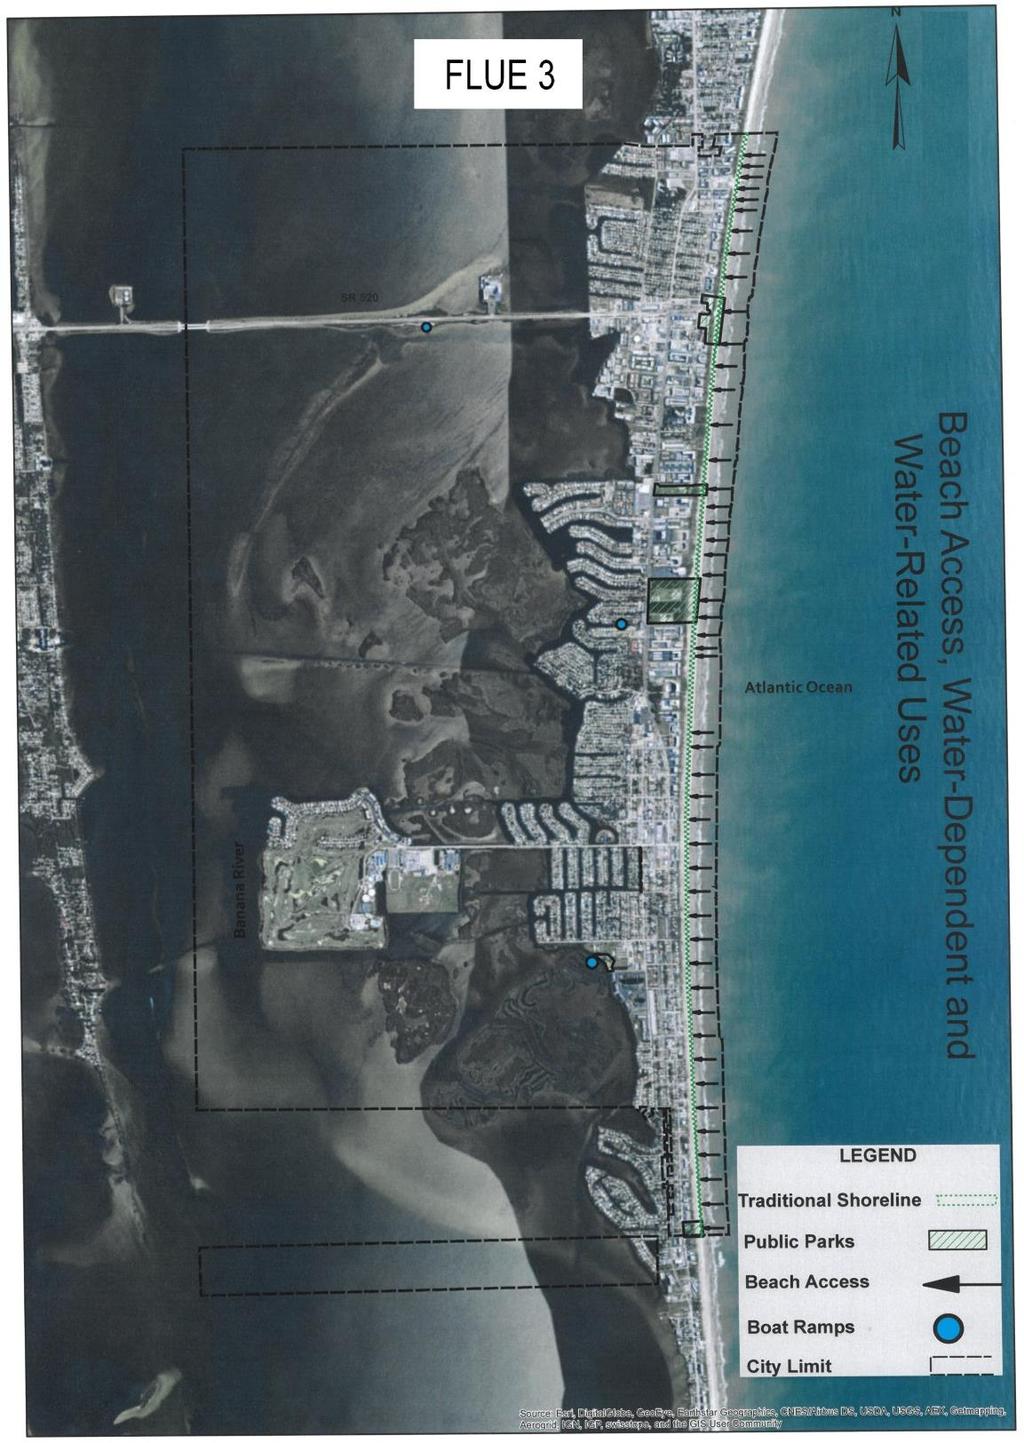 FLUE Map 38 Beach Access, Shores Map and Estuarine System